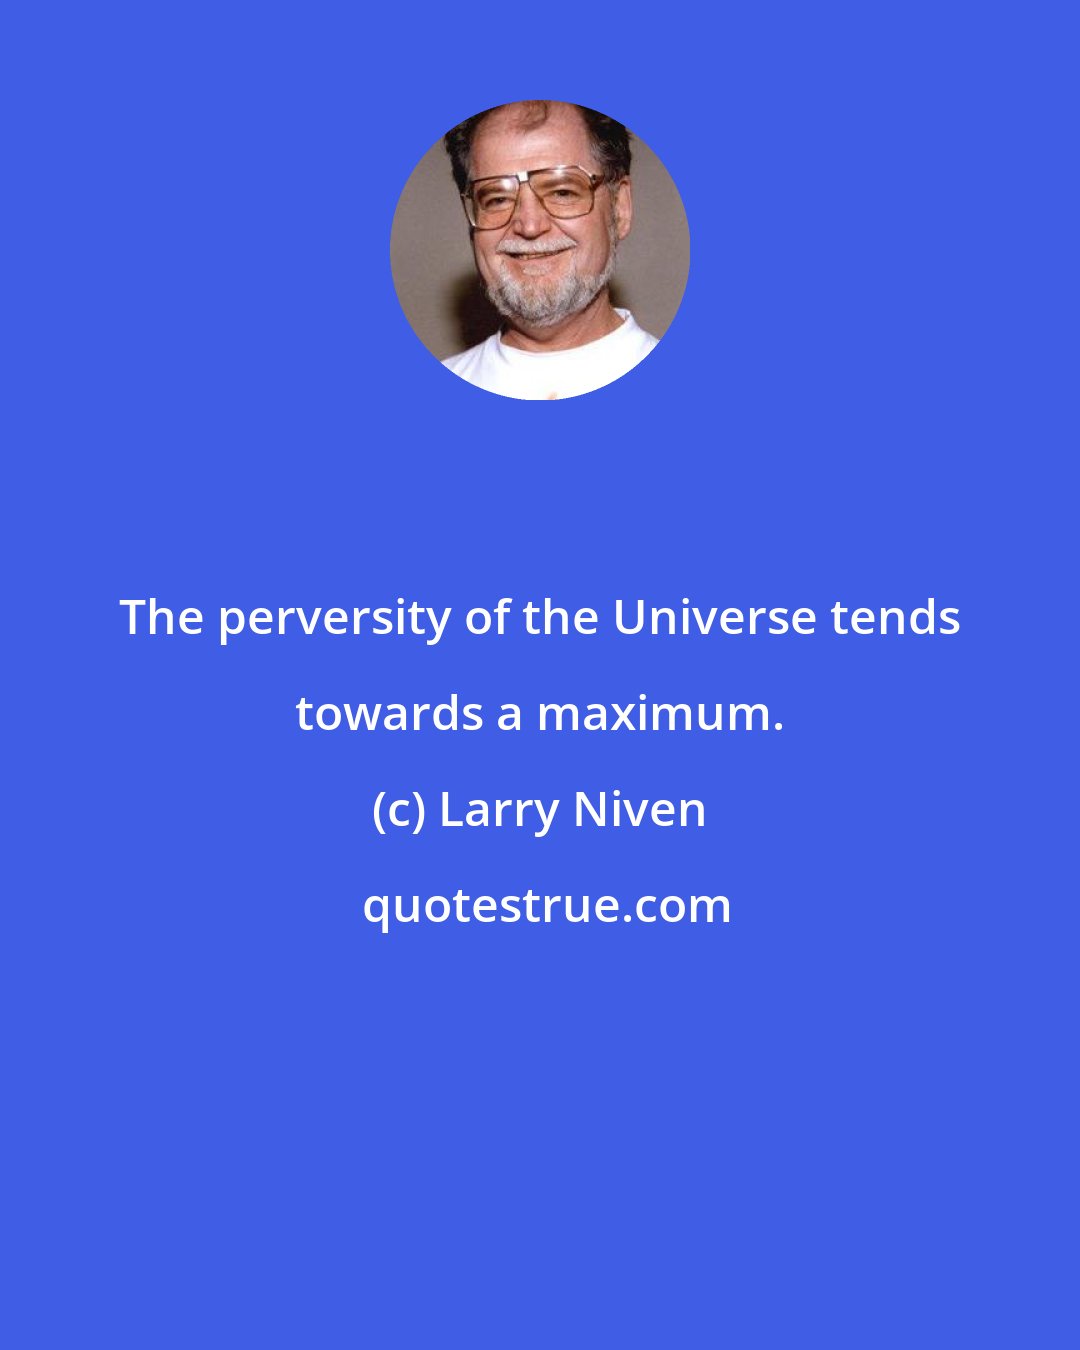 Larry Niven: The perversity of the Universe tends towards a maximum.